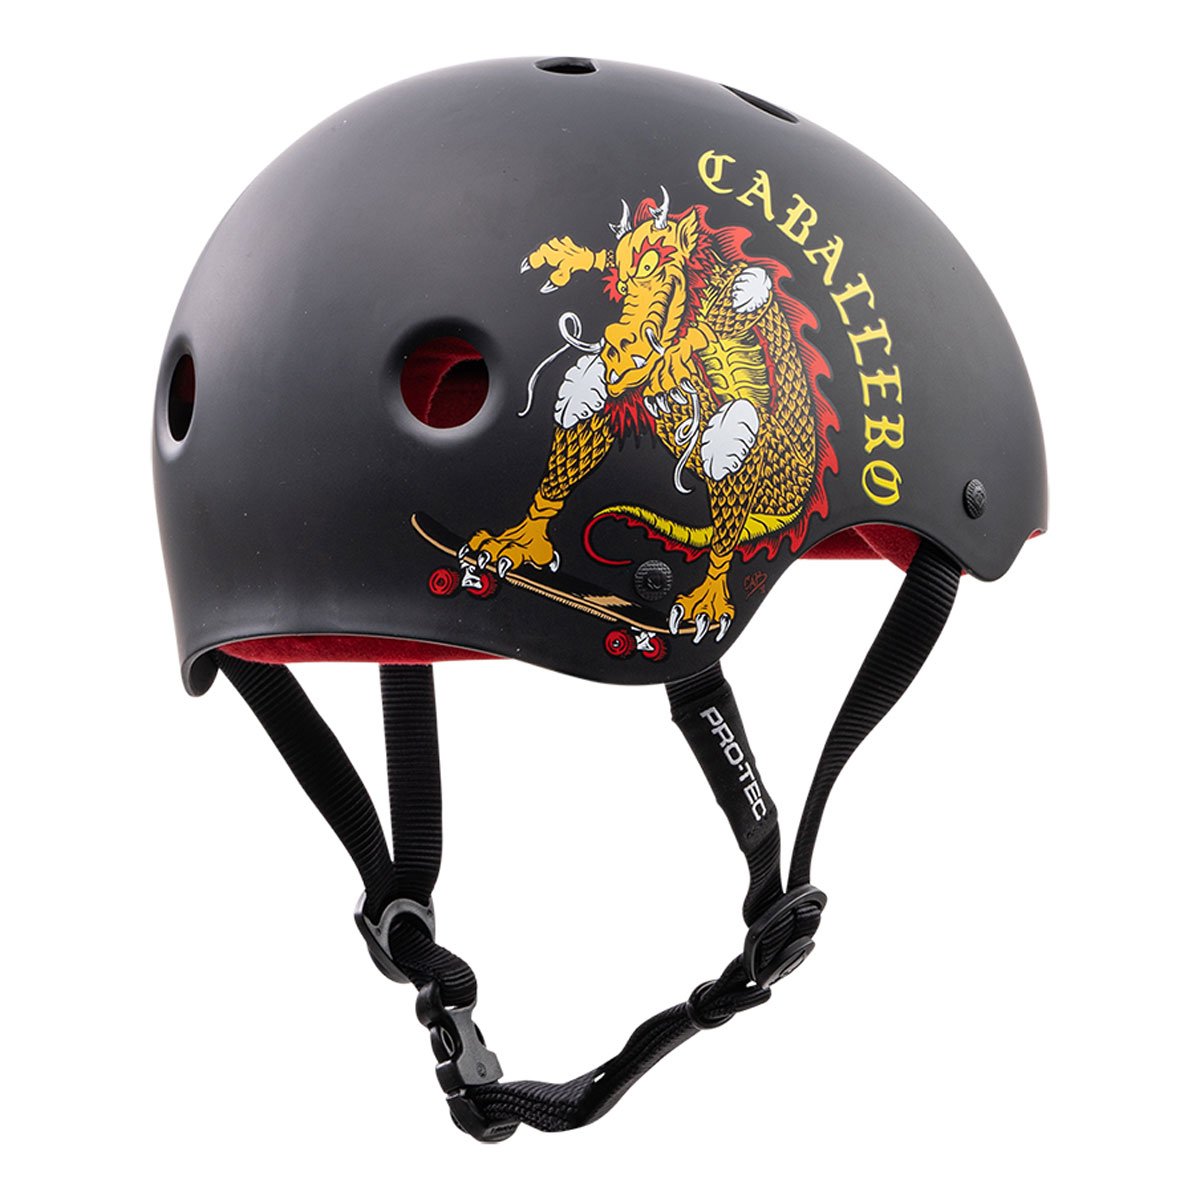 Pro-Tec Classic Certified Helmet - Cab Dragon image 2